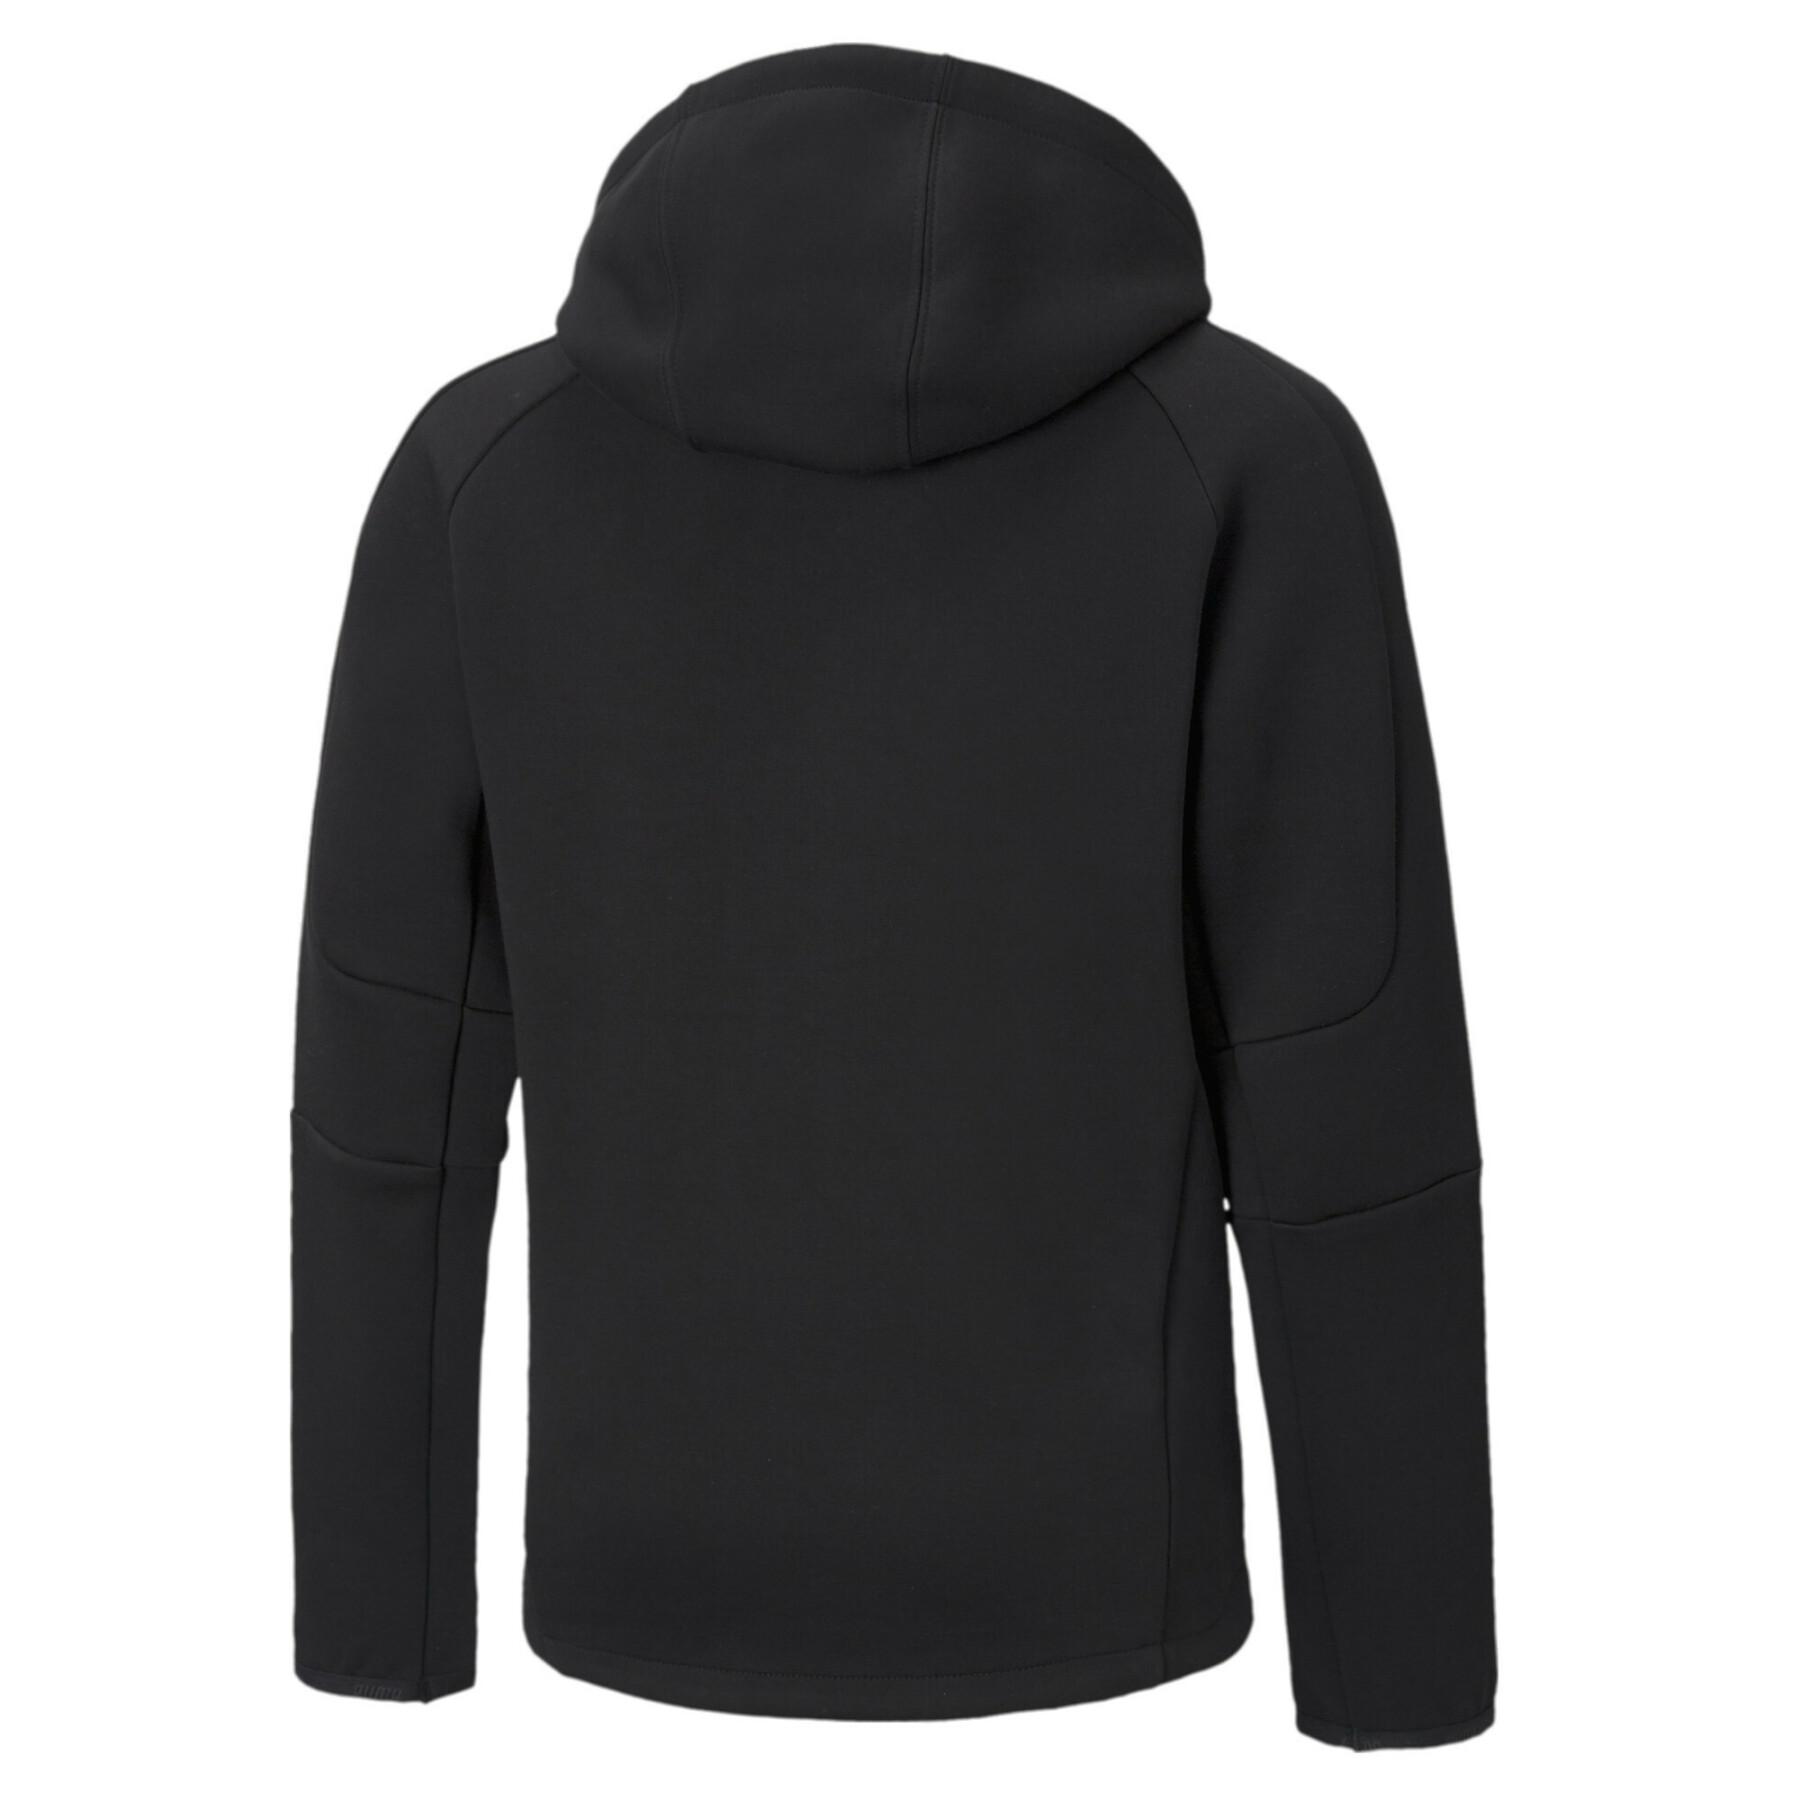 Full-zip hoodie for kids Puma Evostripe